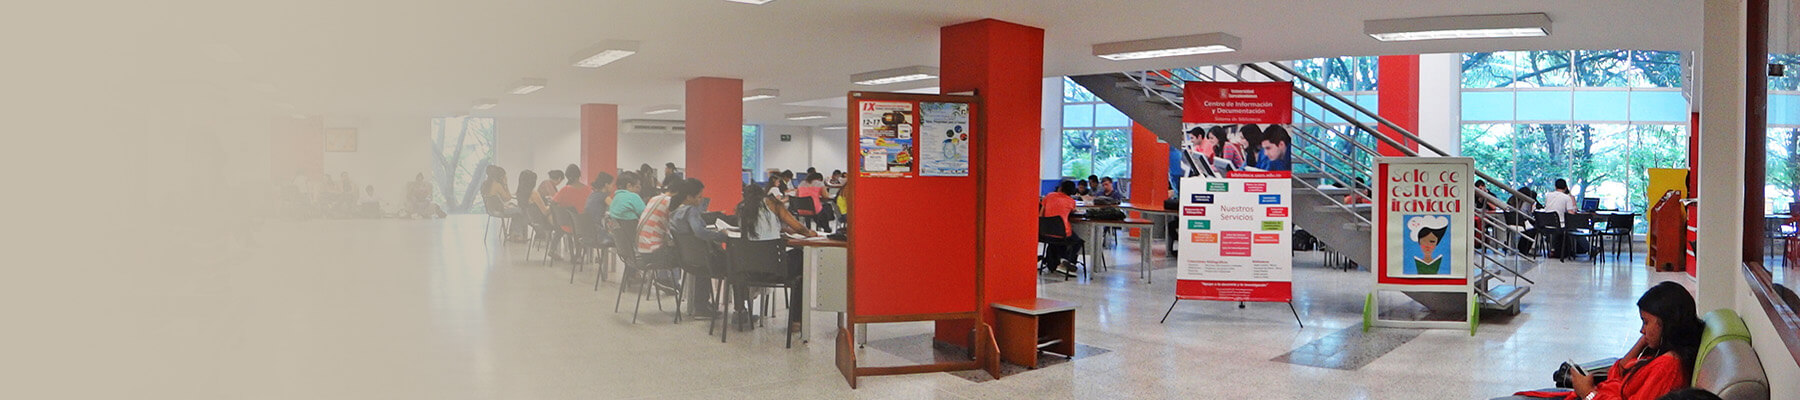 Biblioteca, Universidad Surcolombiana